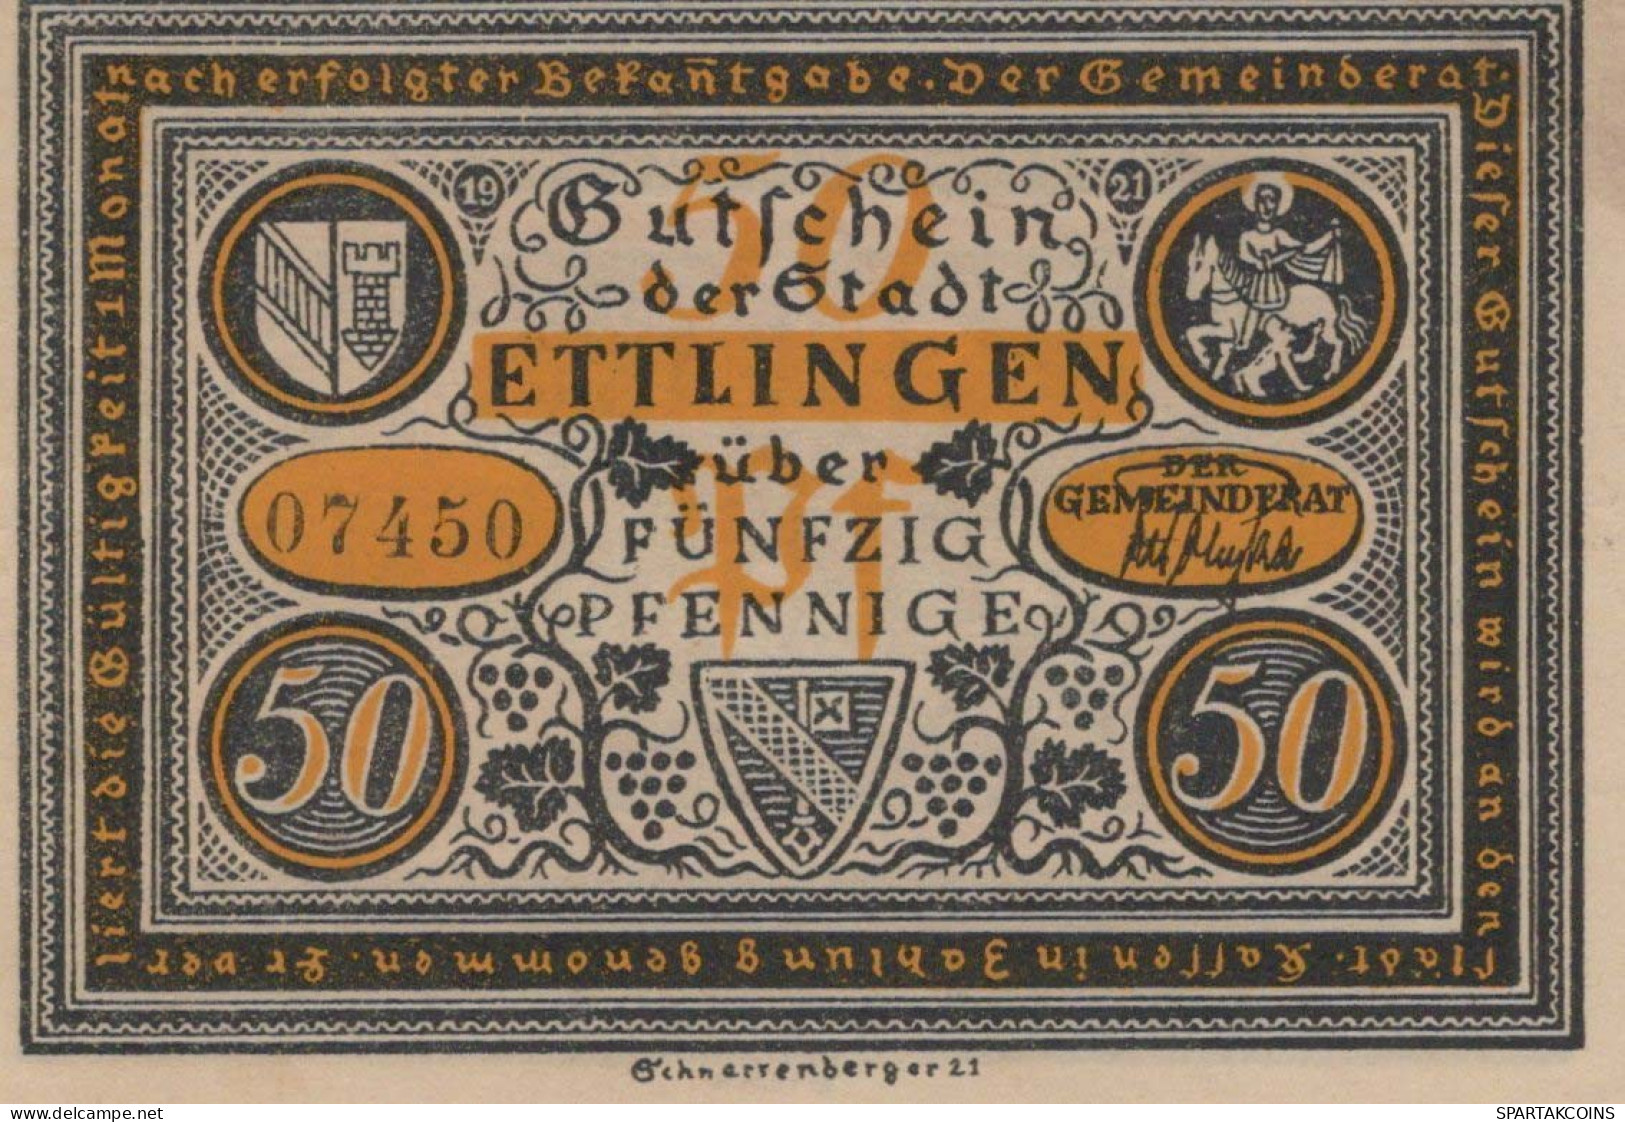 50 PFENNIG 1921 Stadt ETTLINGEN Baden UNC DEUTSCHLAND Notgeld Banknote #PB367 - [11] Local Banknote Issues